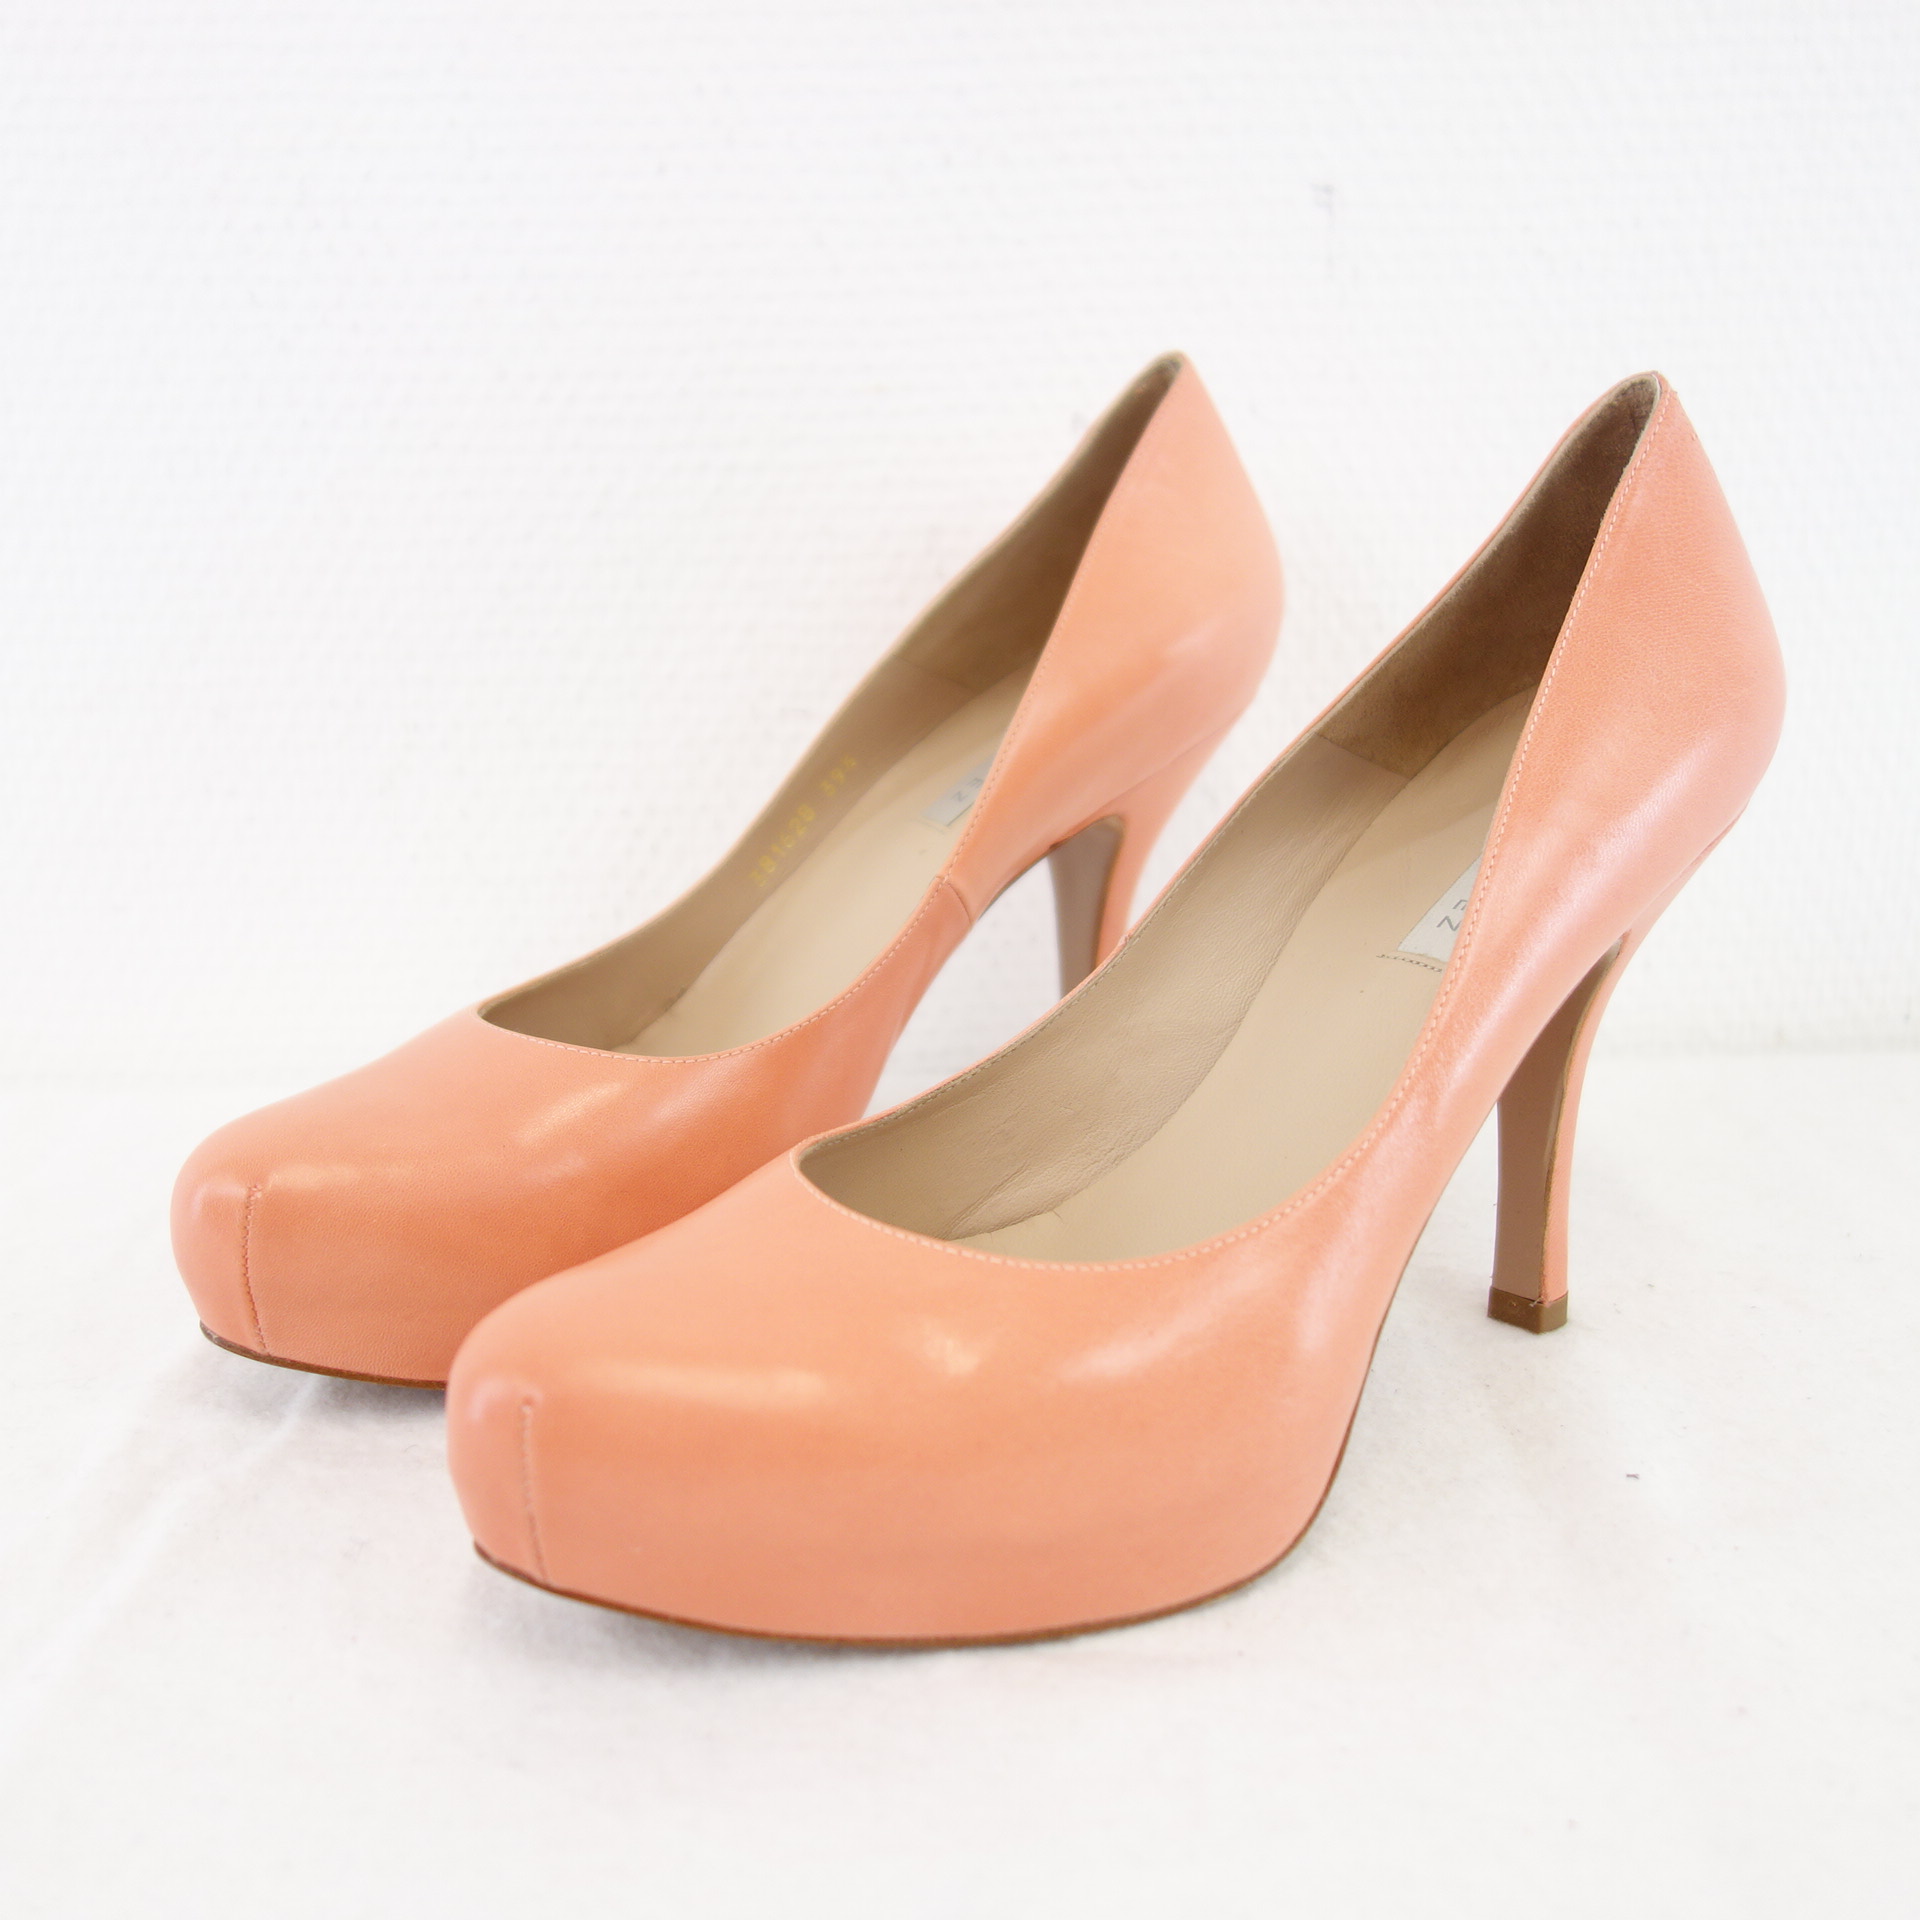 PURA LOPEZ Damen Schuhe Pumps High Heels Stiletto Leder Magnolia Rosa 39,5